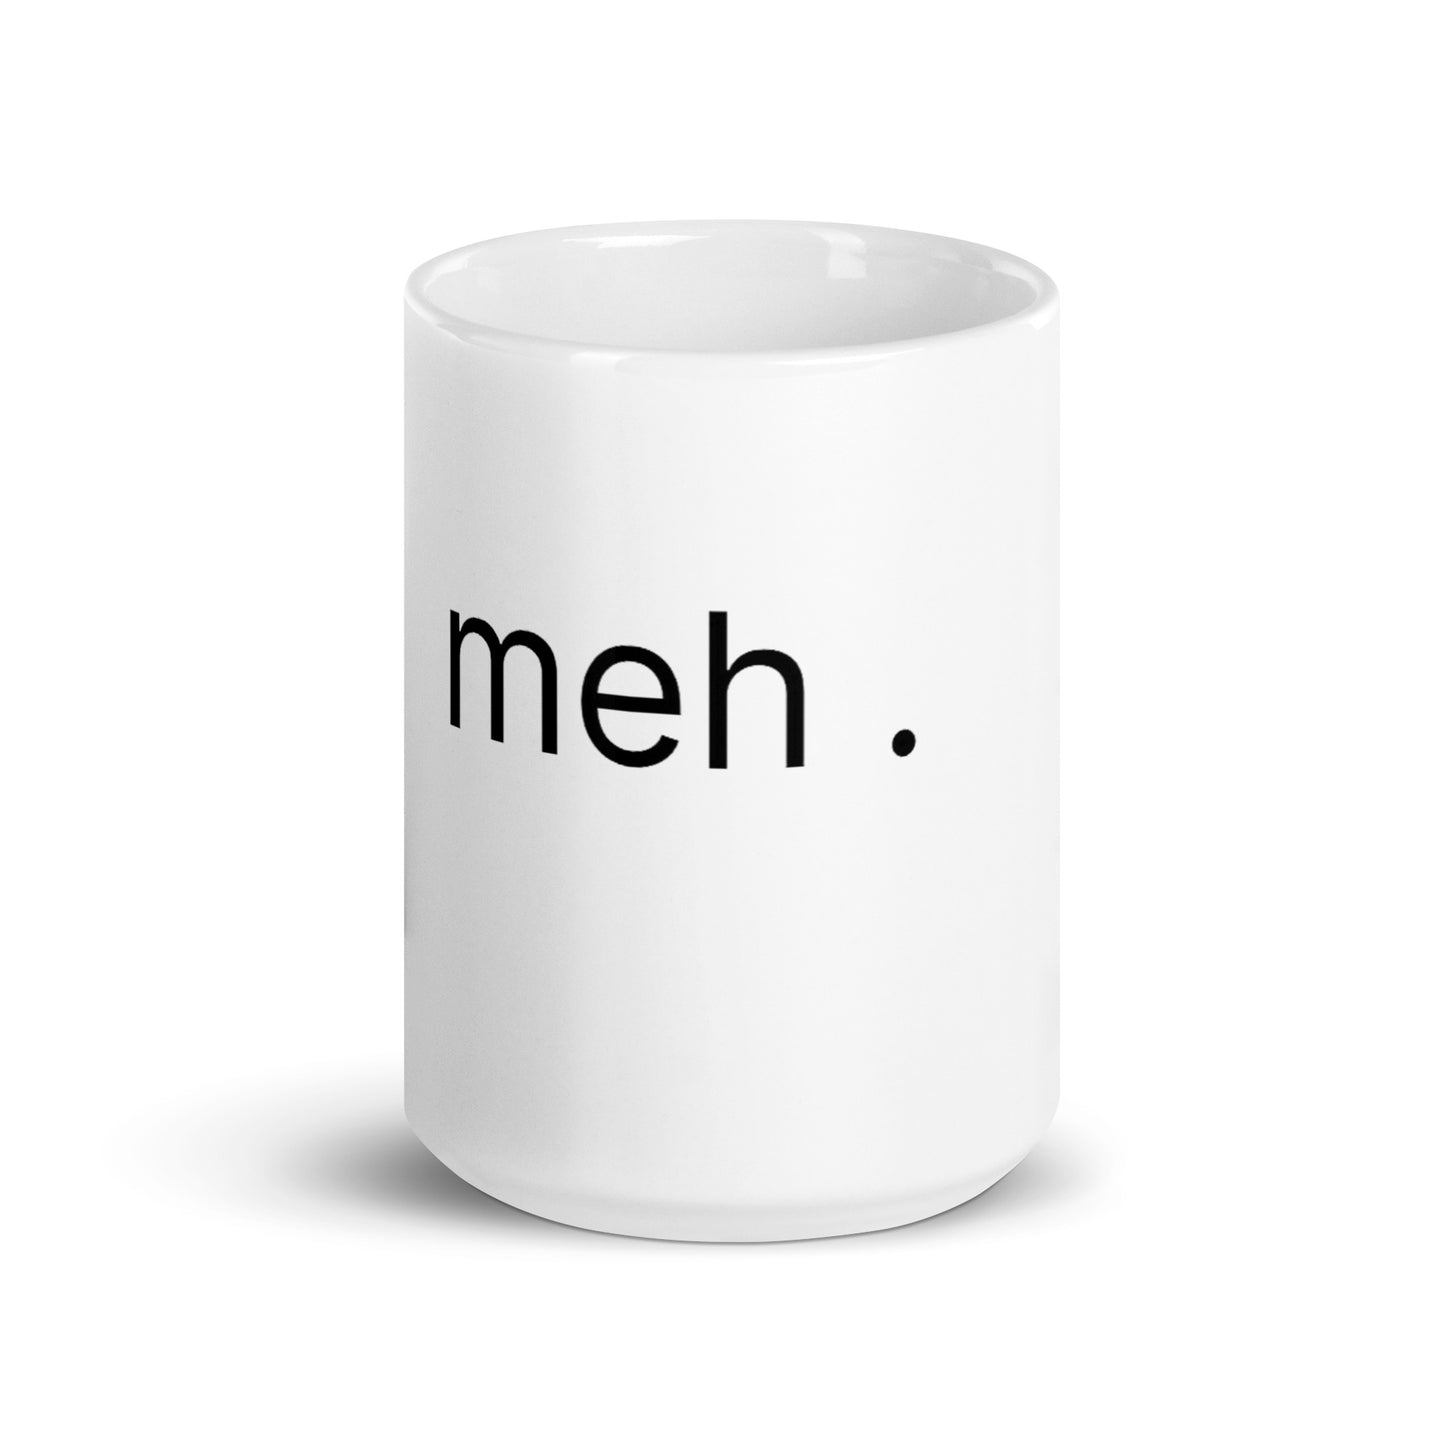 Meh. glossy mug